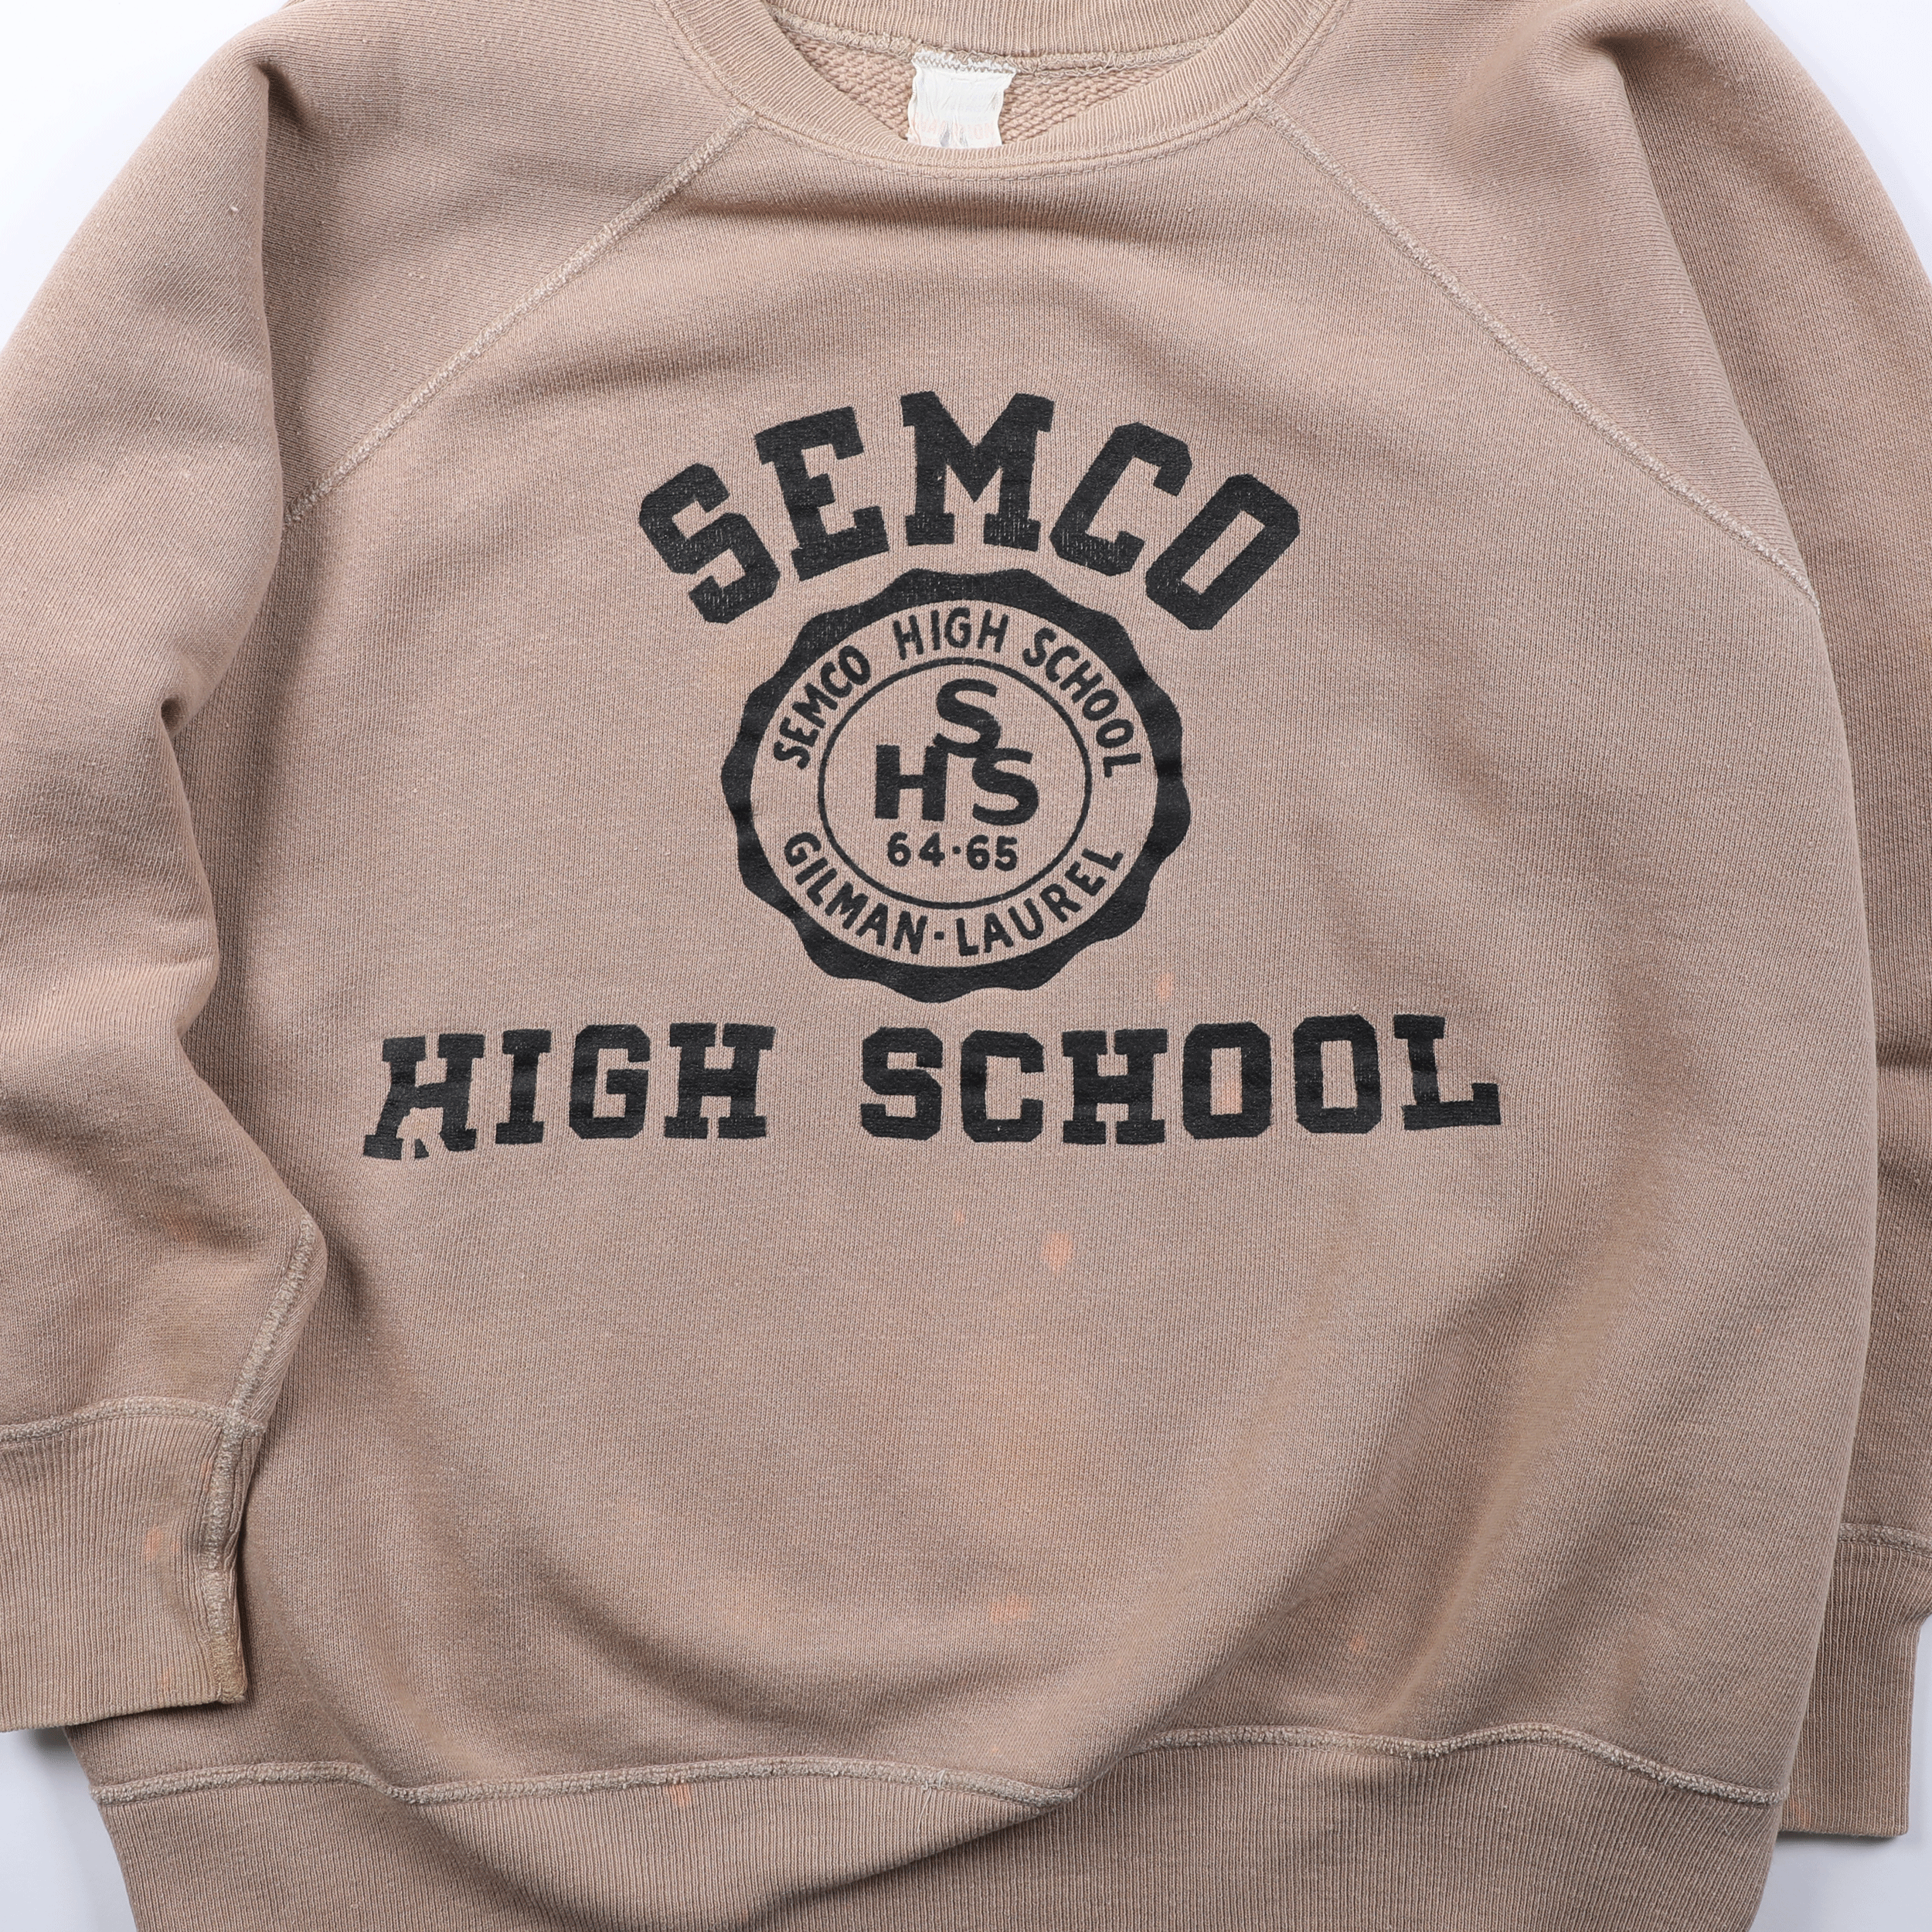 Vintage 1960s Champion Sweatshirt Semco High - Small